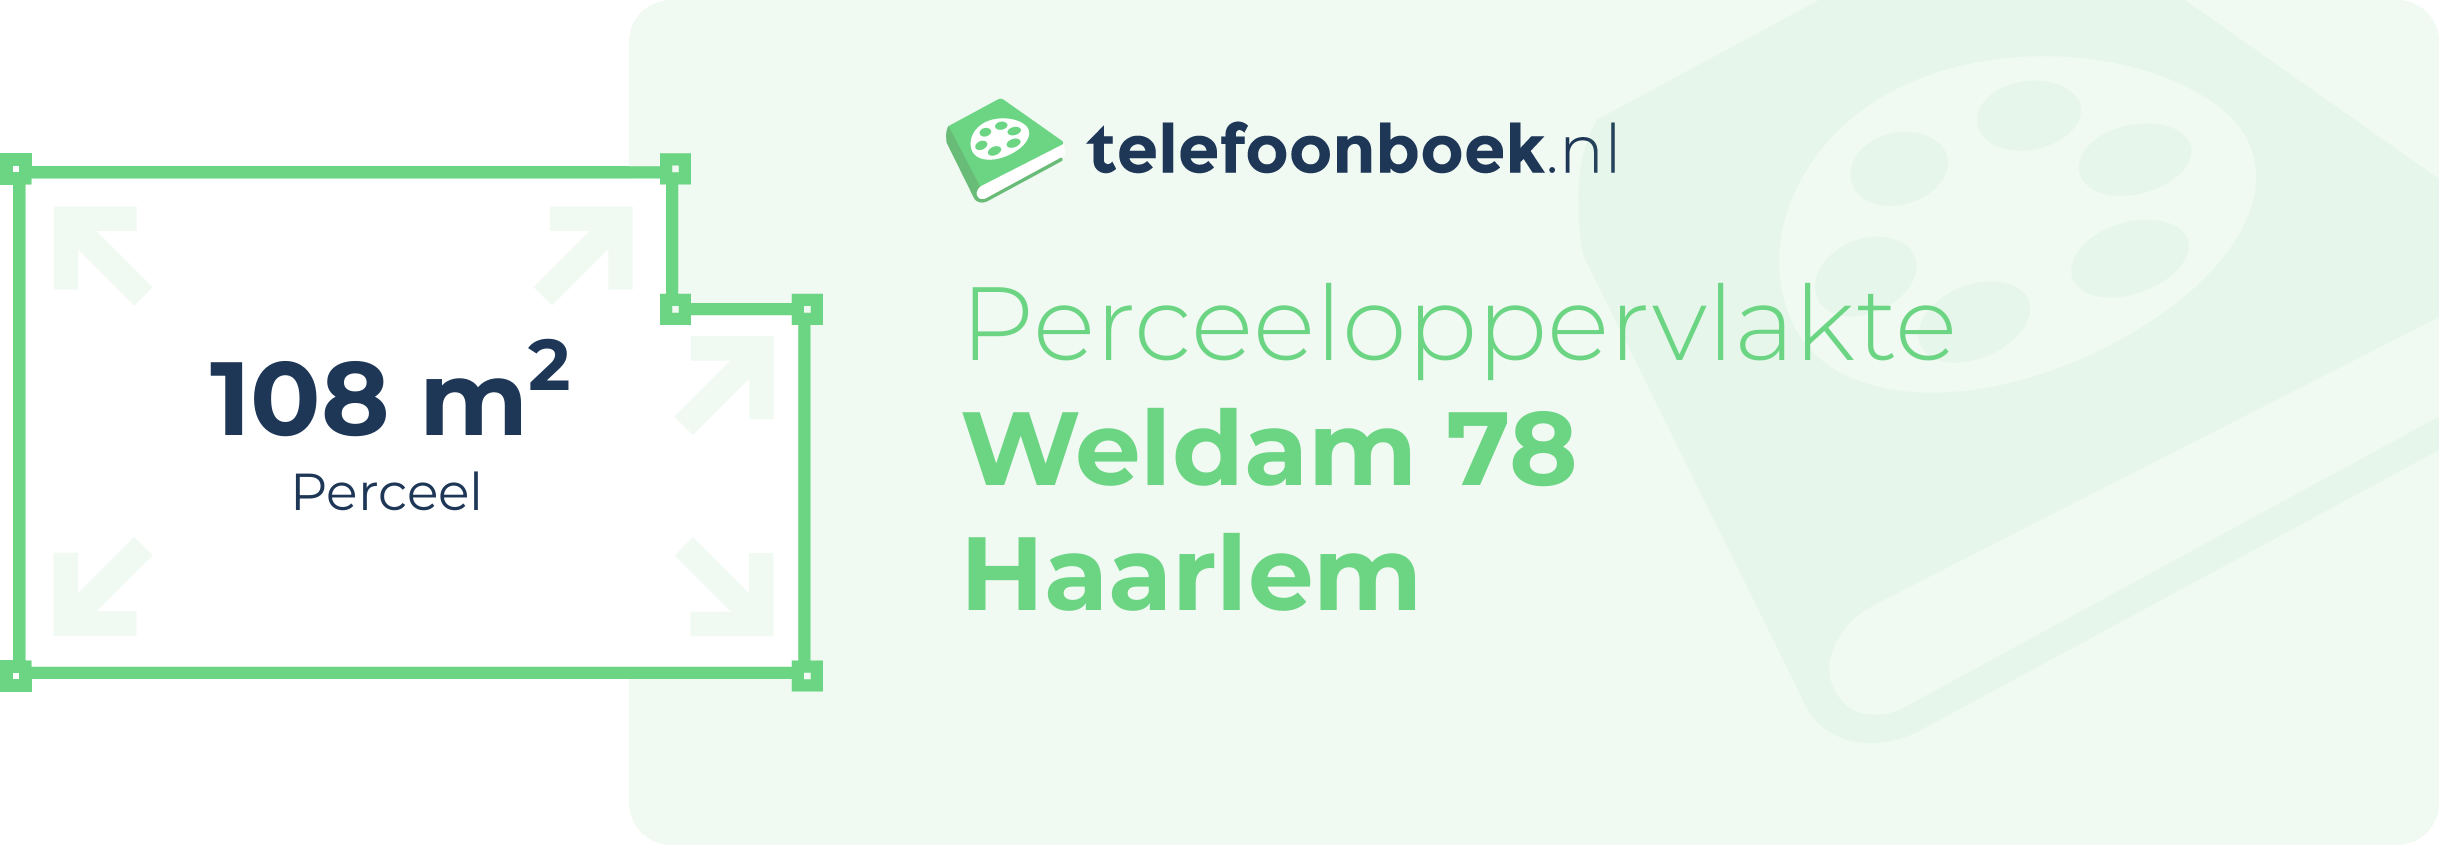 Perceeloppervlakte Weldam 78 Haarlem